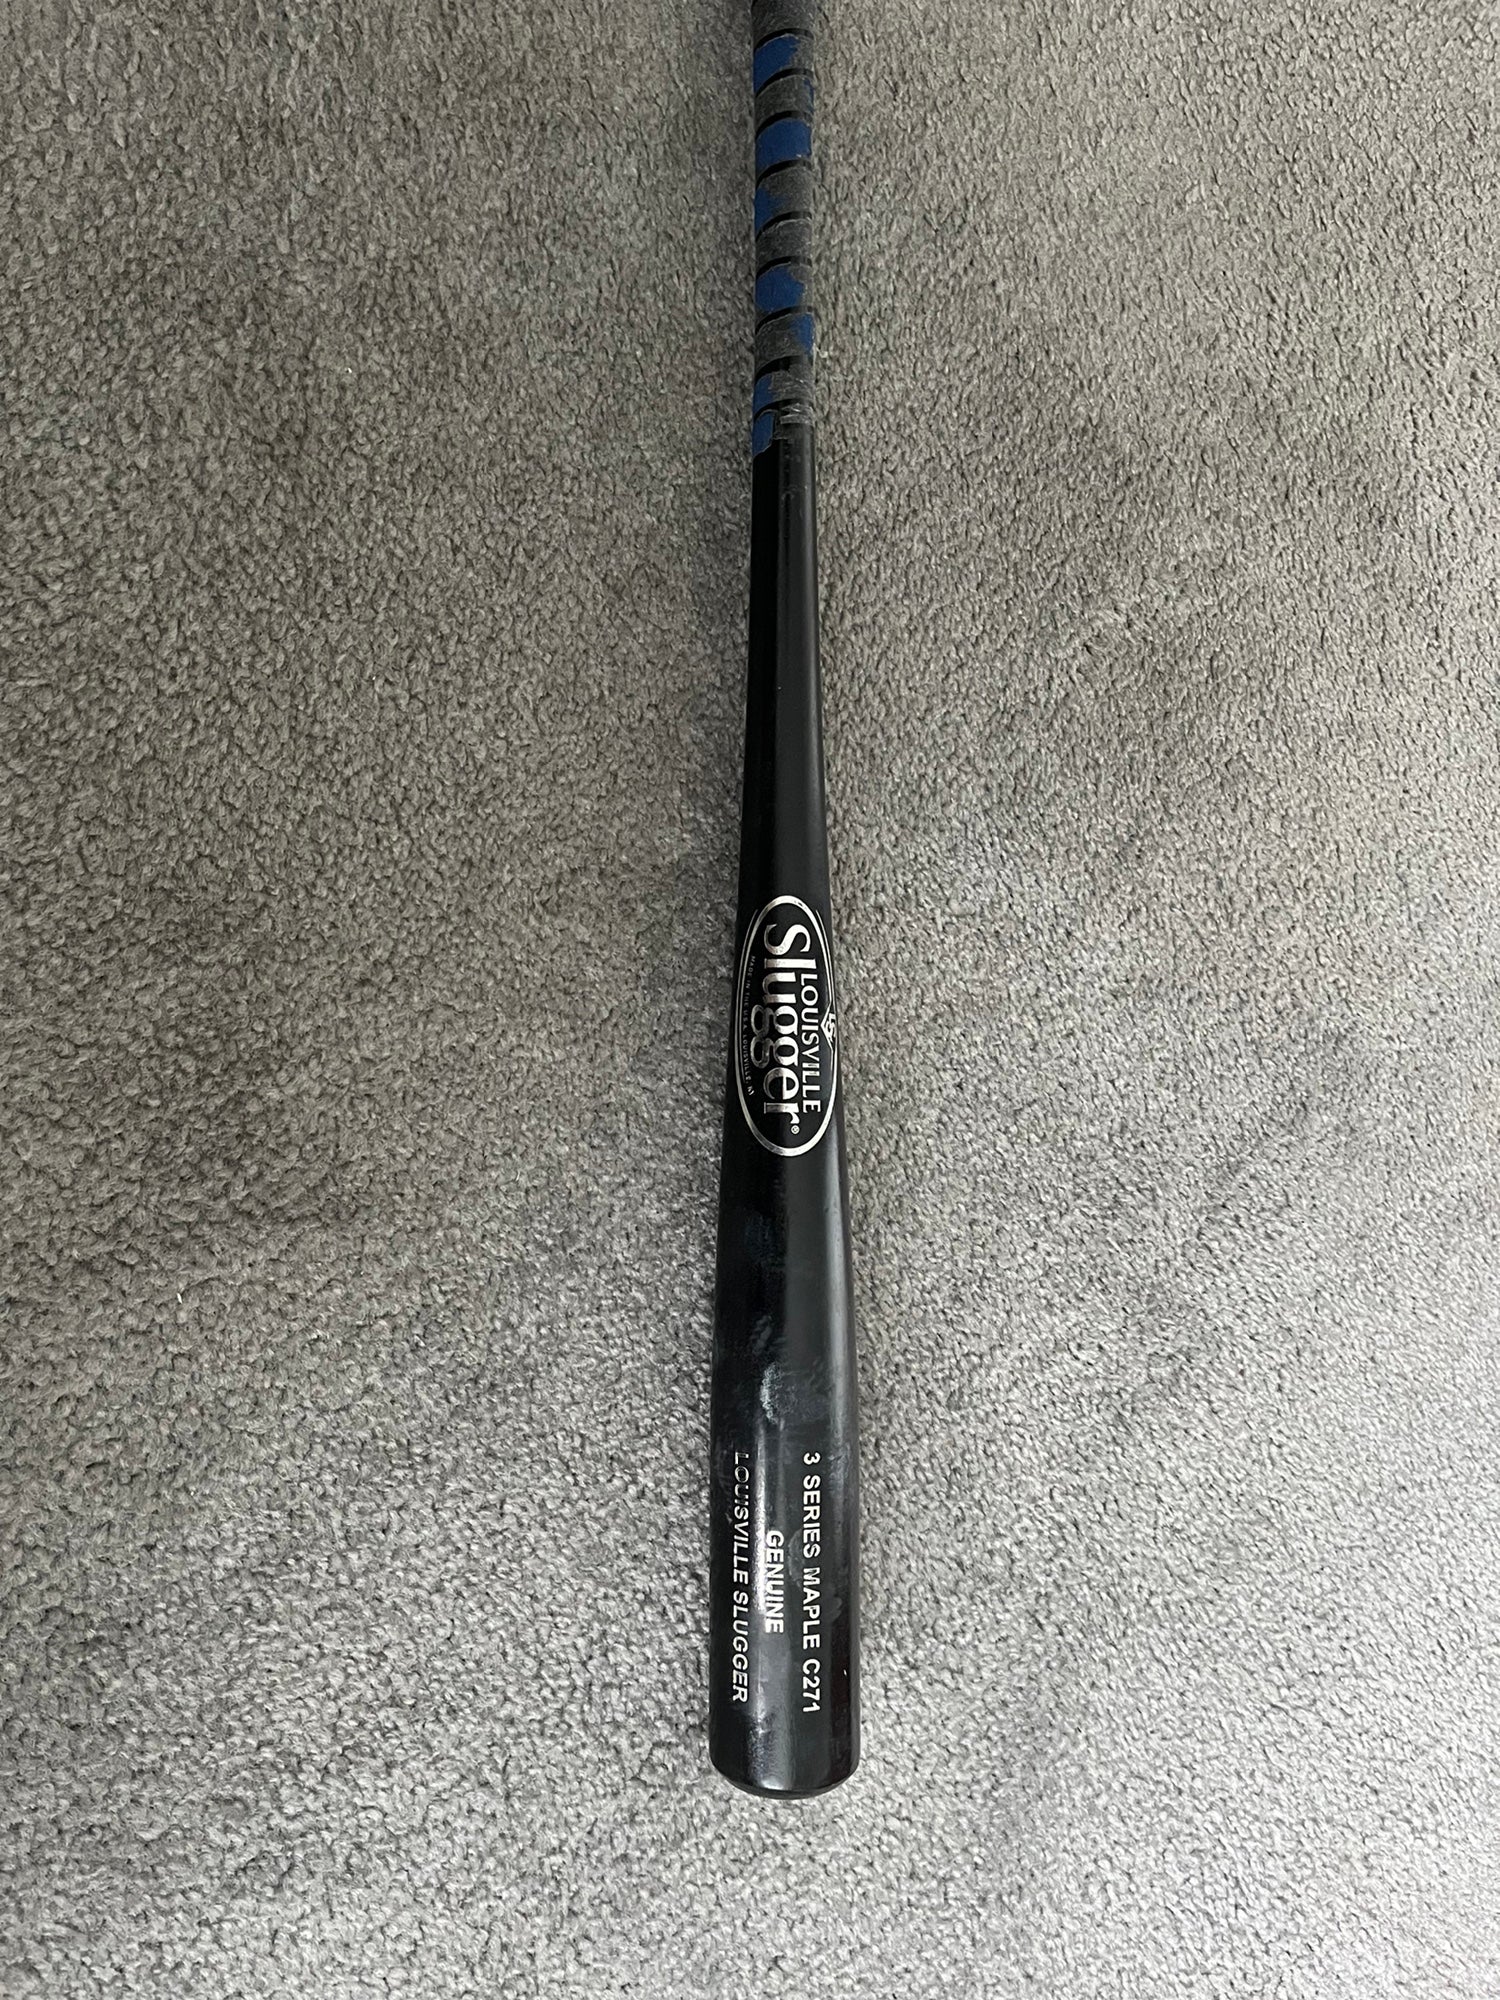 Louisville Slugger 3 Series Maple C271 Baseball Bat